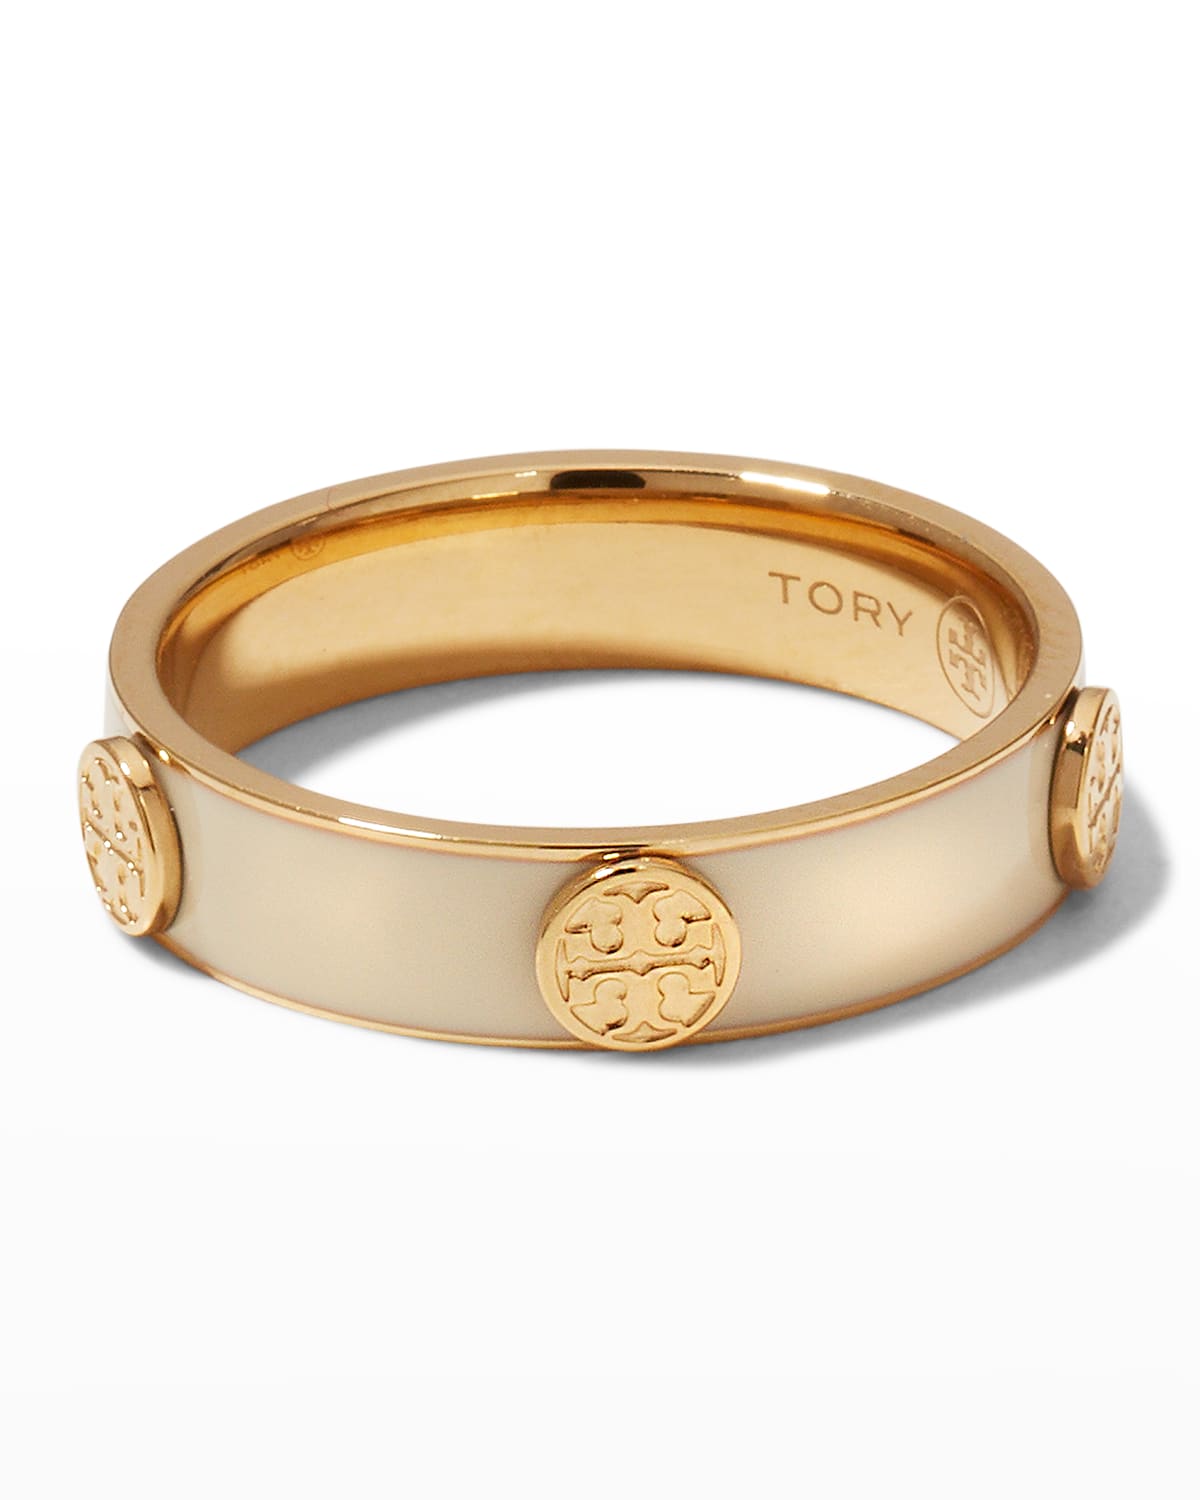 Tory Burch Miller Stud Enamel Ring In Gold/ivory